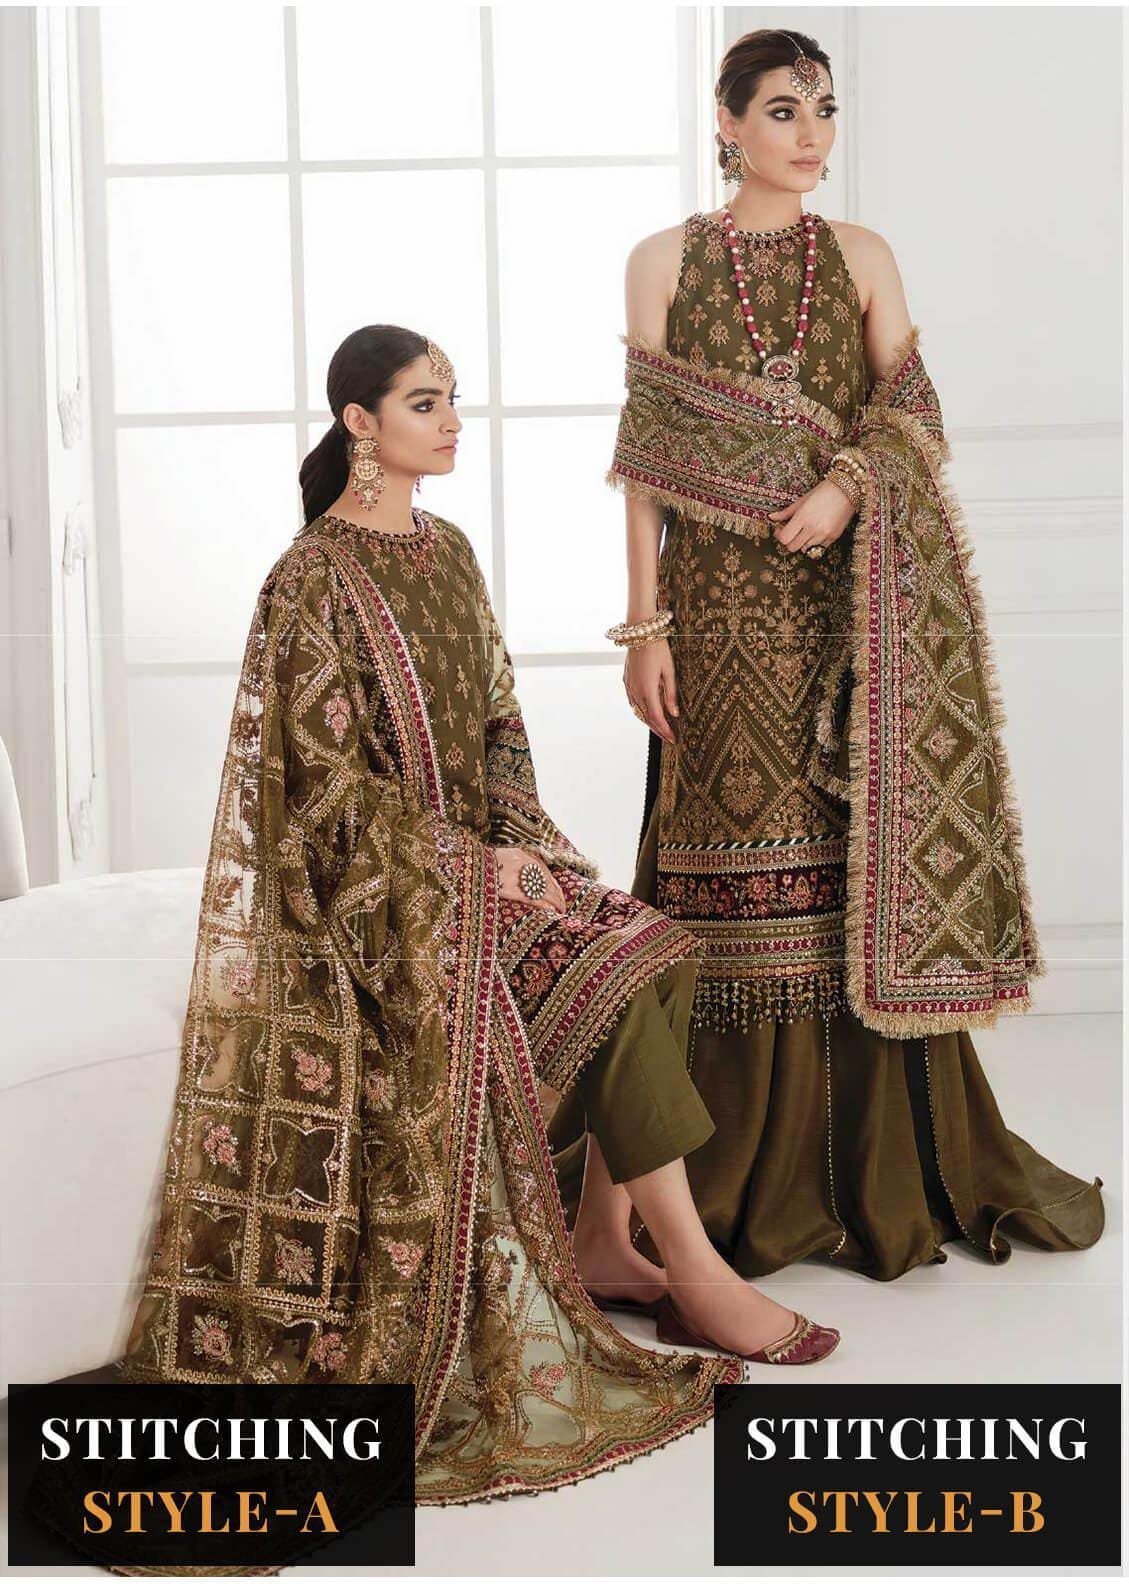 2022 Punjabi Suit| New Punjabi Suit Design 2022| 2022 Top Suits Collection|  Trending Punjabi Suits..